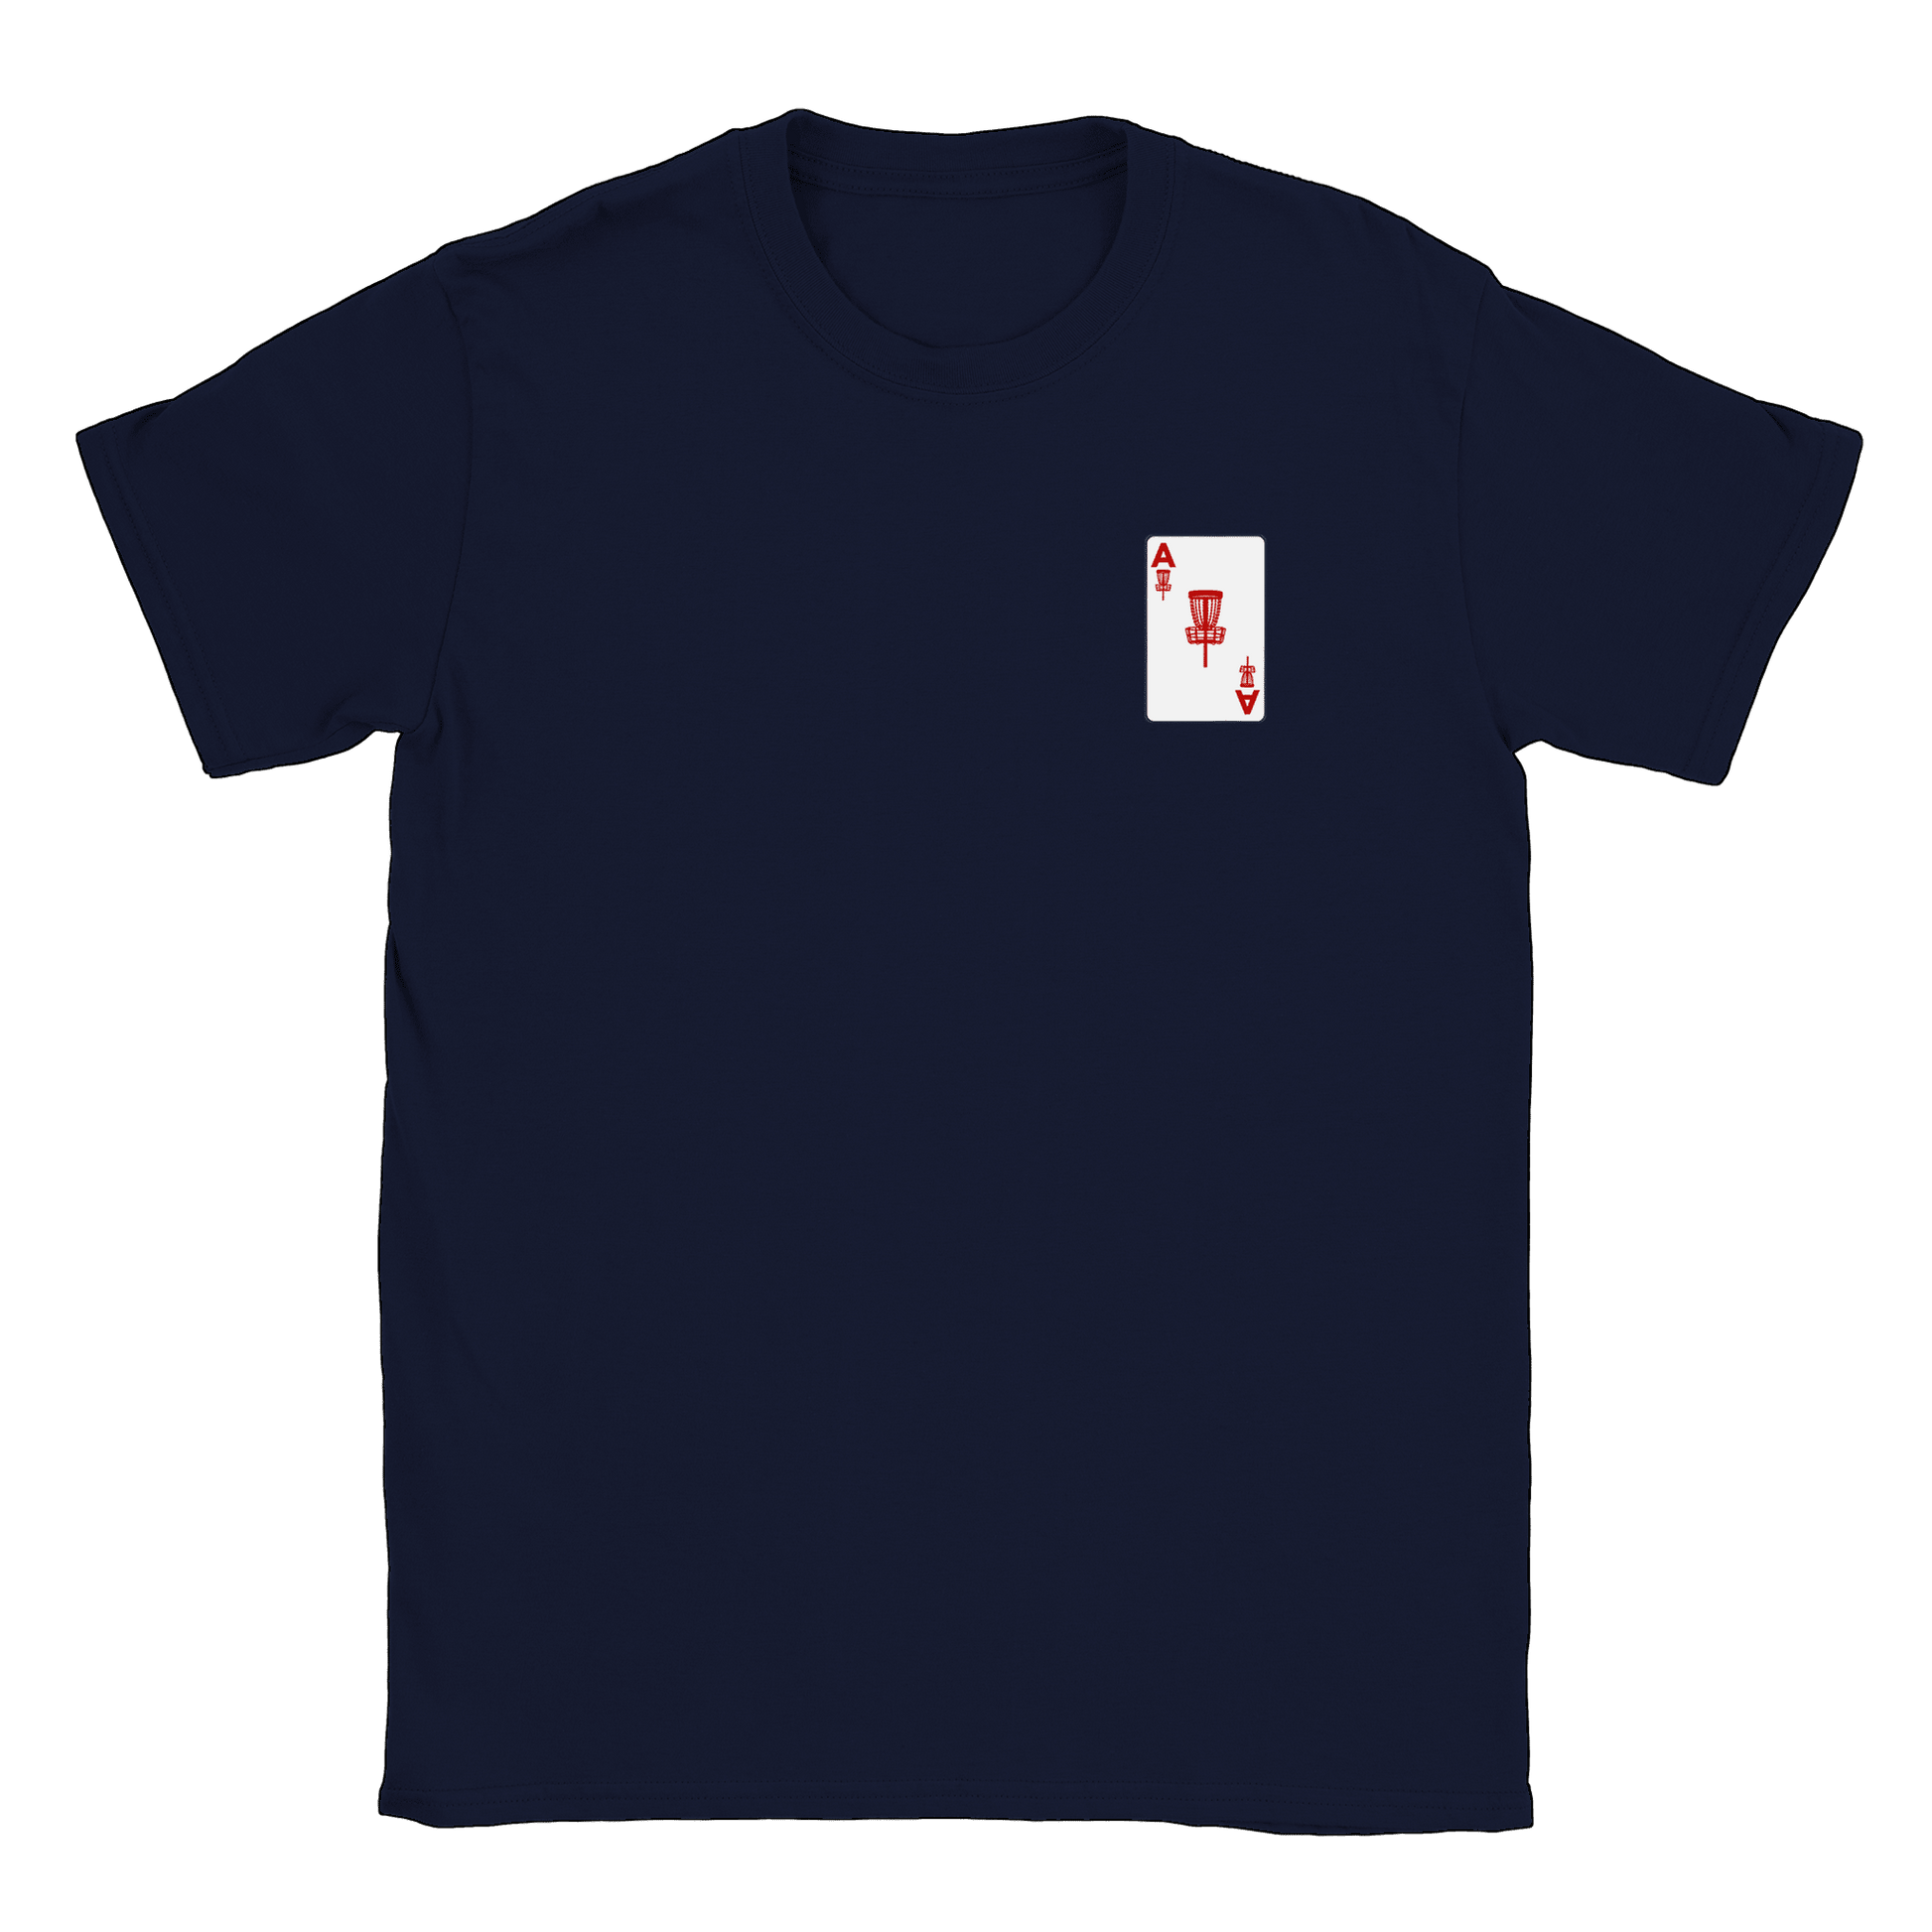 ACE Discgolf litet tryck - T-shirt Navy